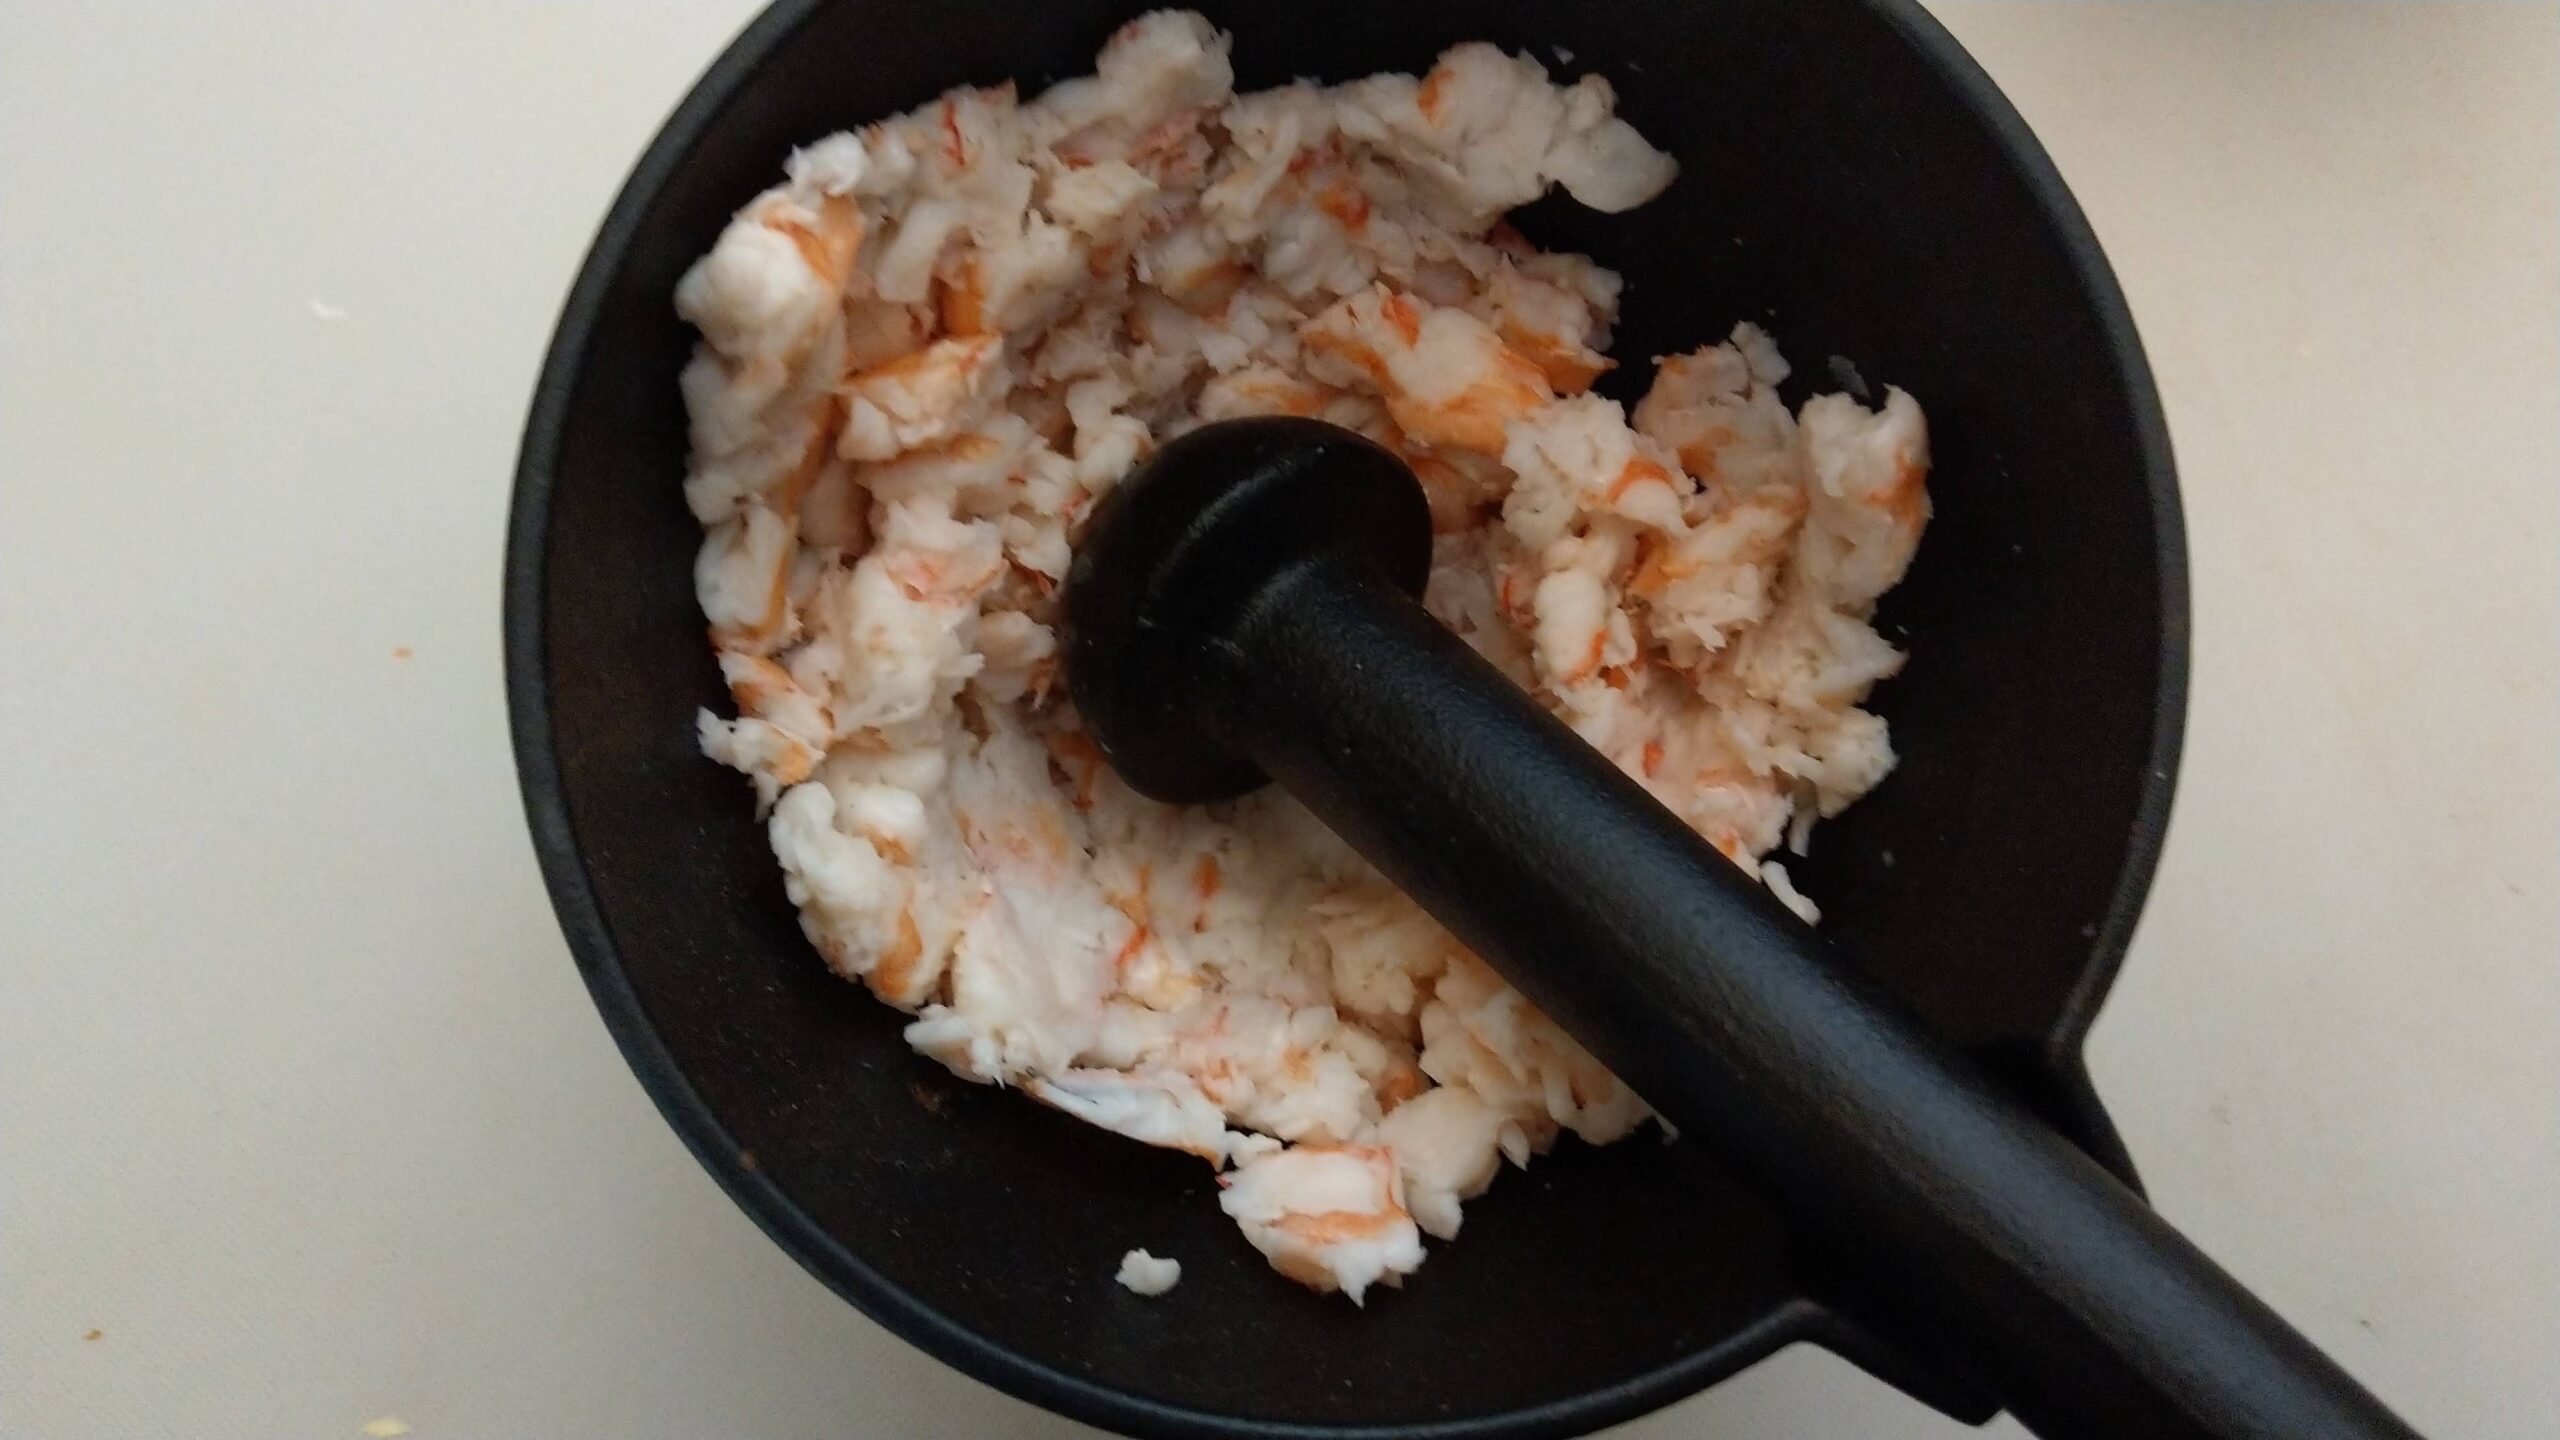 Mortaring the chopped shrimp